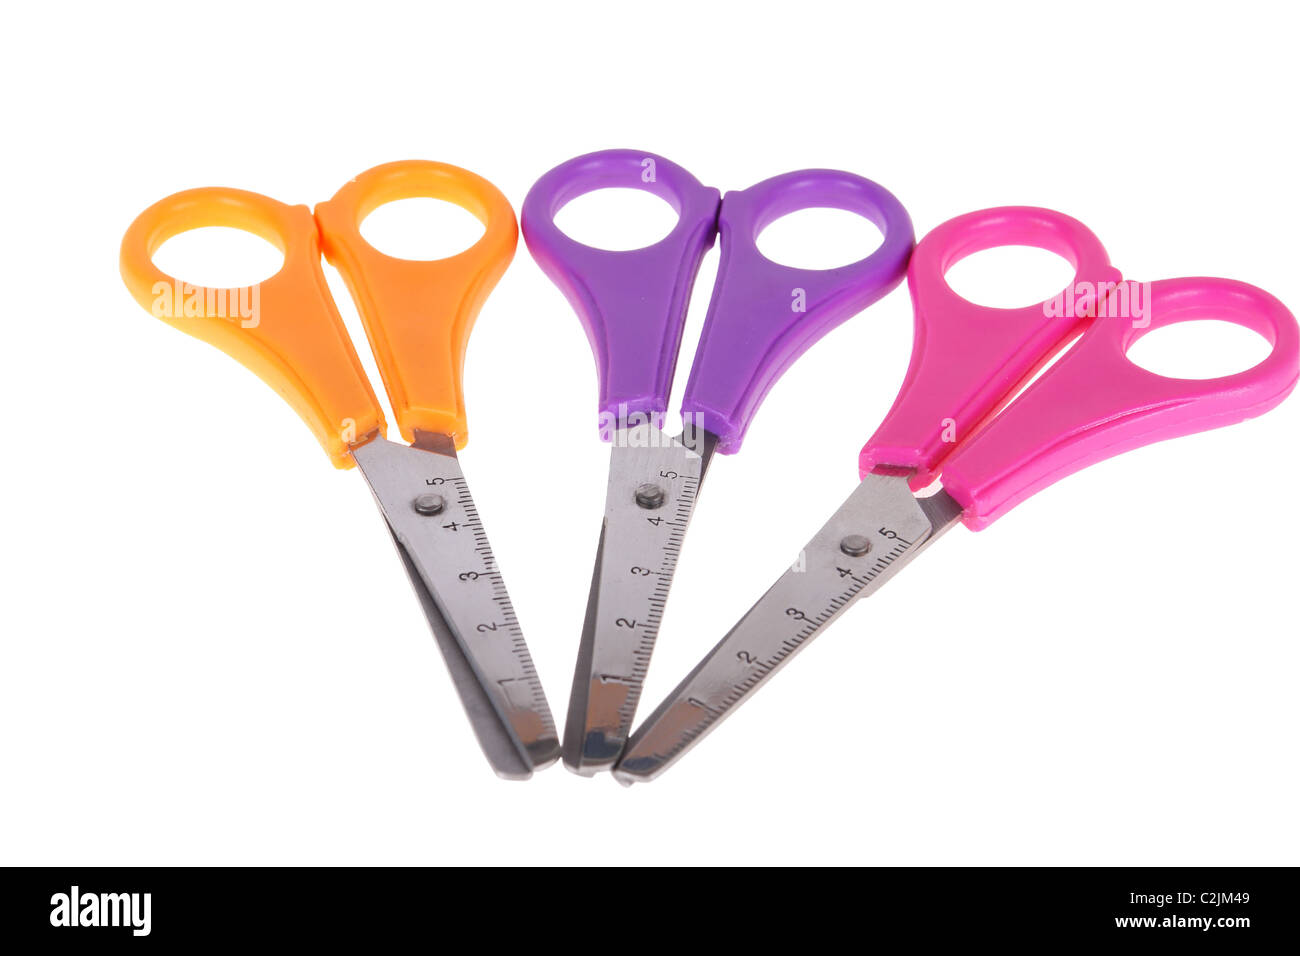 scissors isolated on white background tool Stock Photo